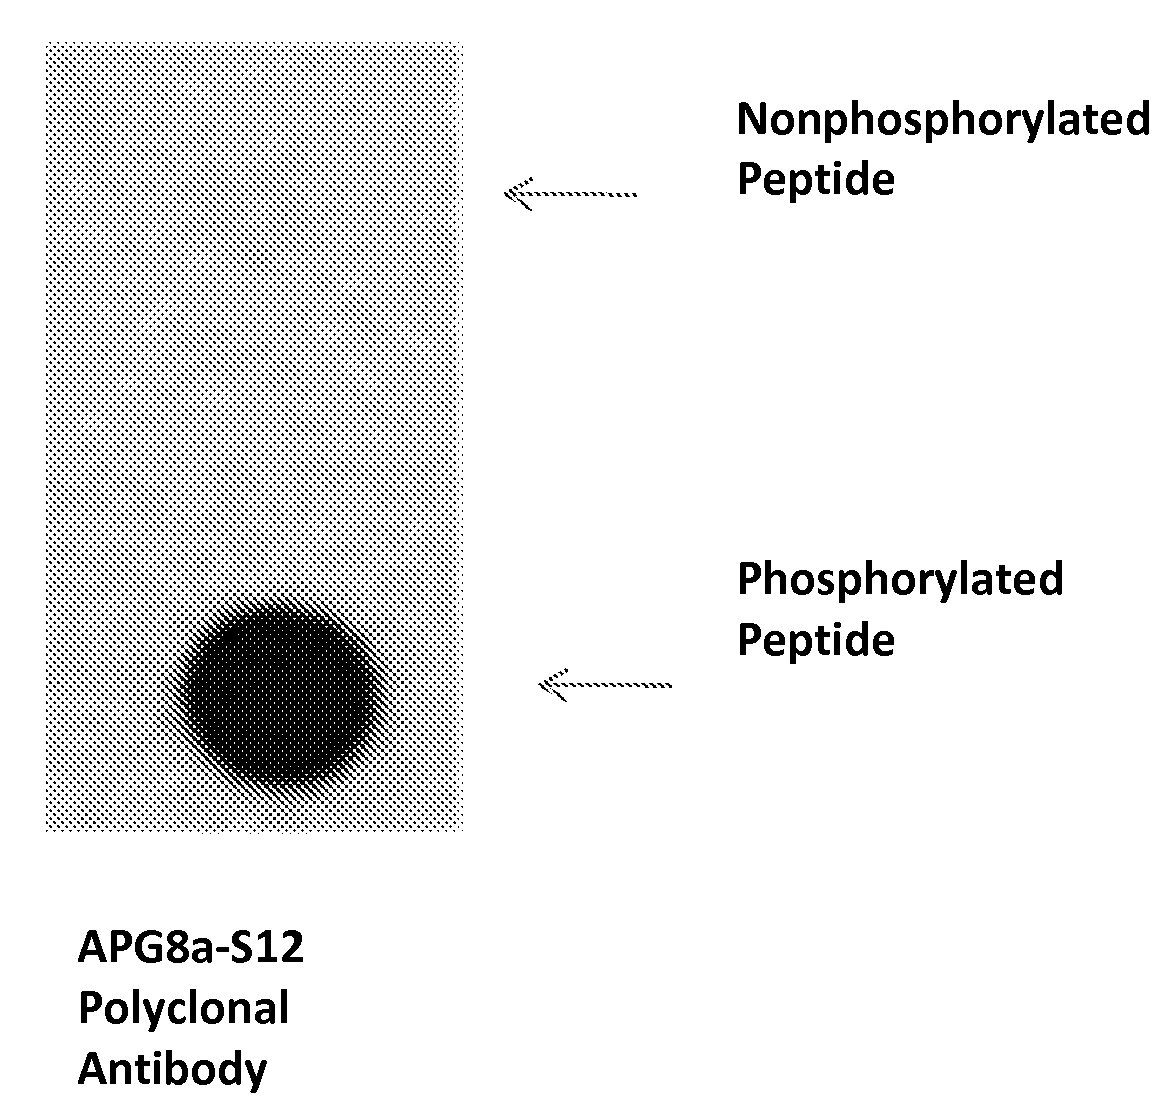 Regulation of apg8 phosphorylation and uses thereof